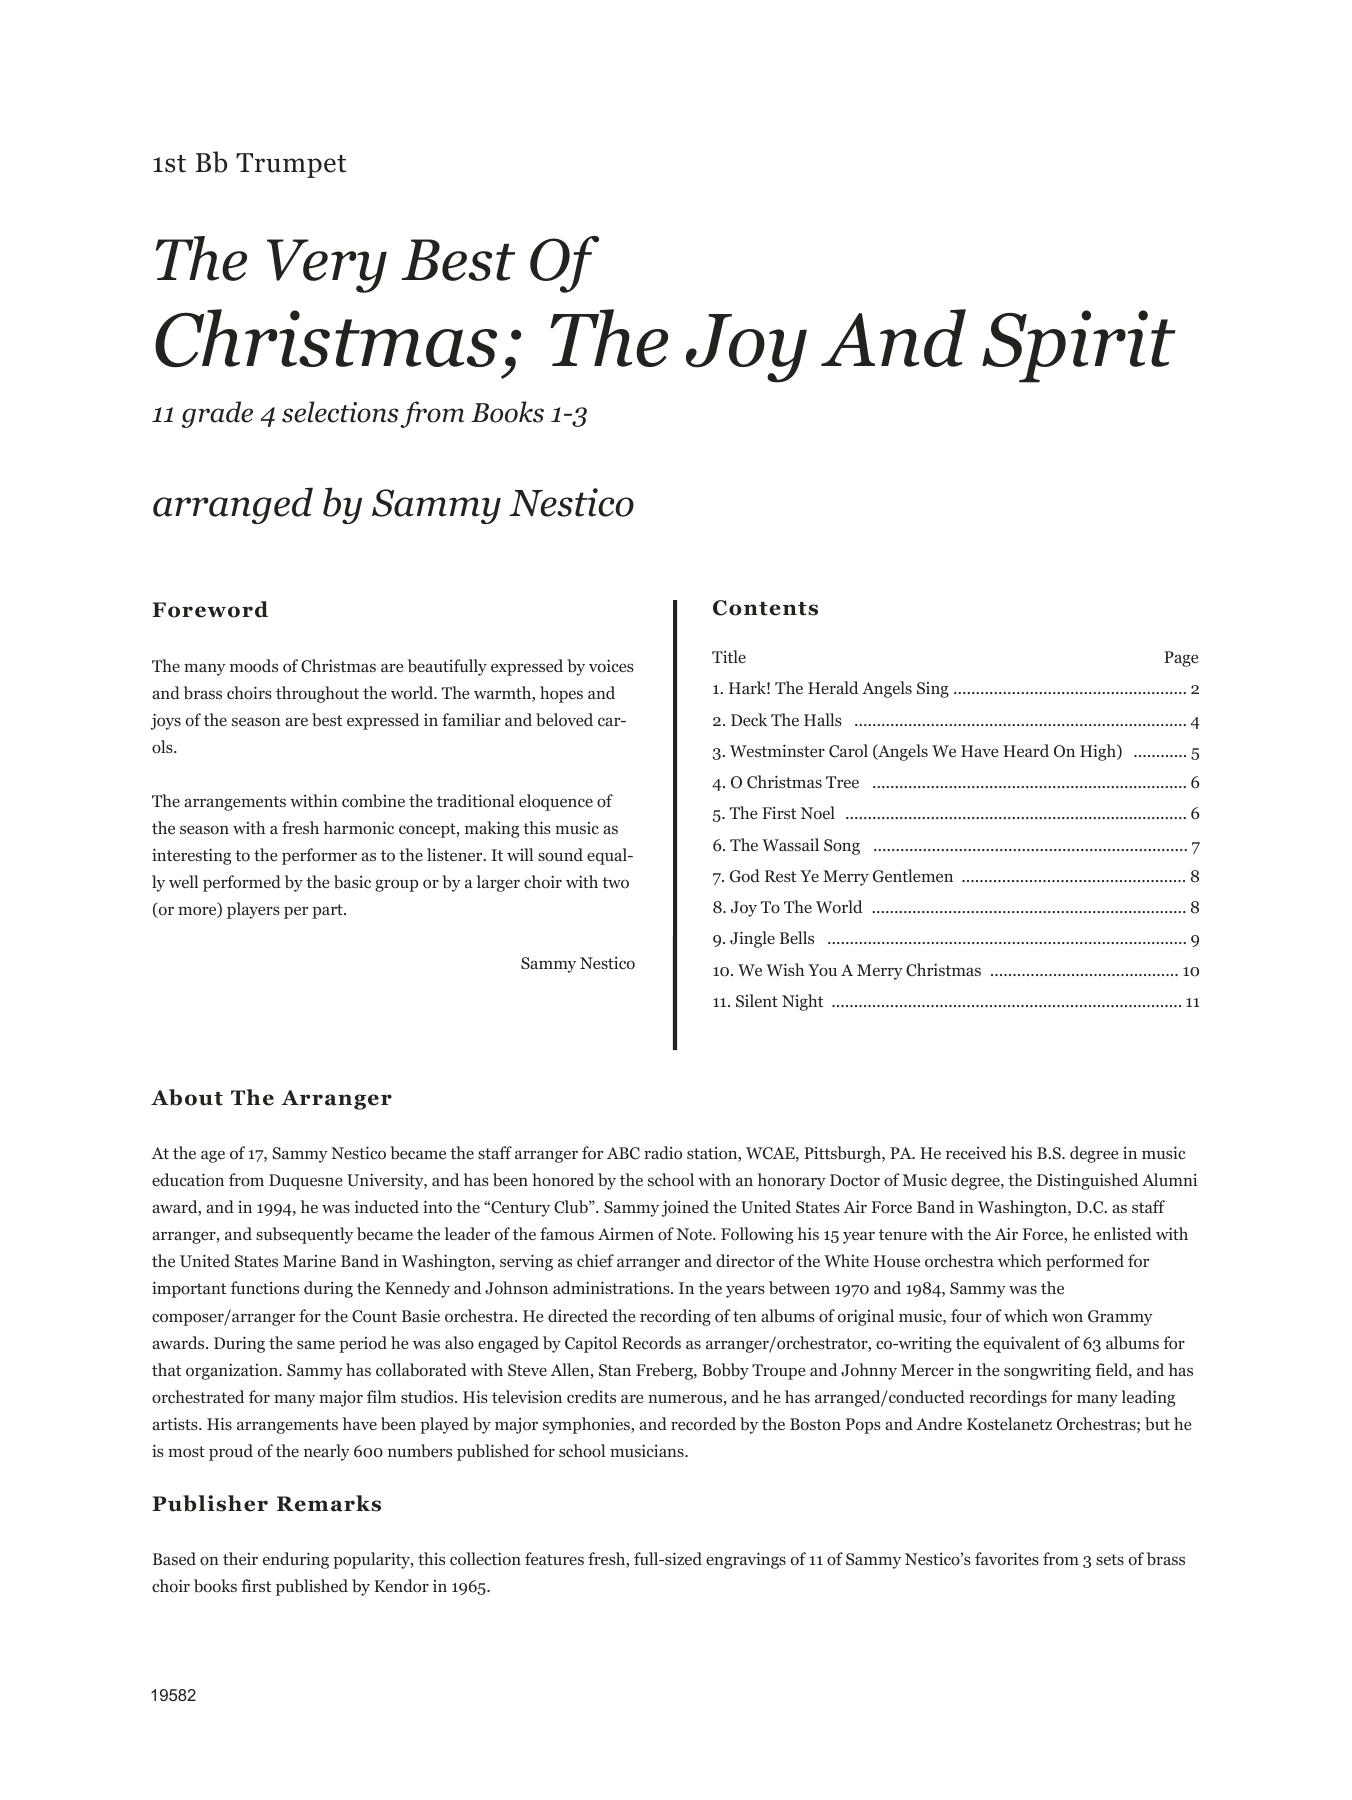 Very Best Of Christmas; The Joy And Spirit (Books 1-3) - 1st Bb Trumpet (Brass Ensemble) von Sammy Nestico